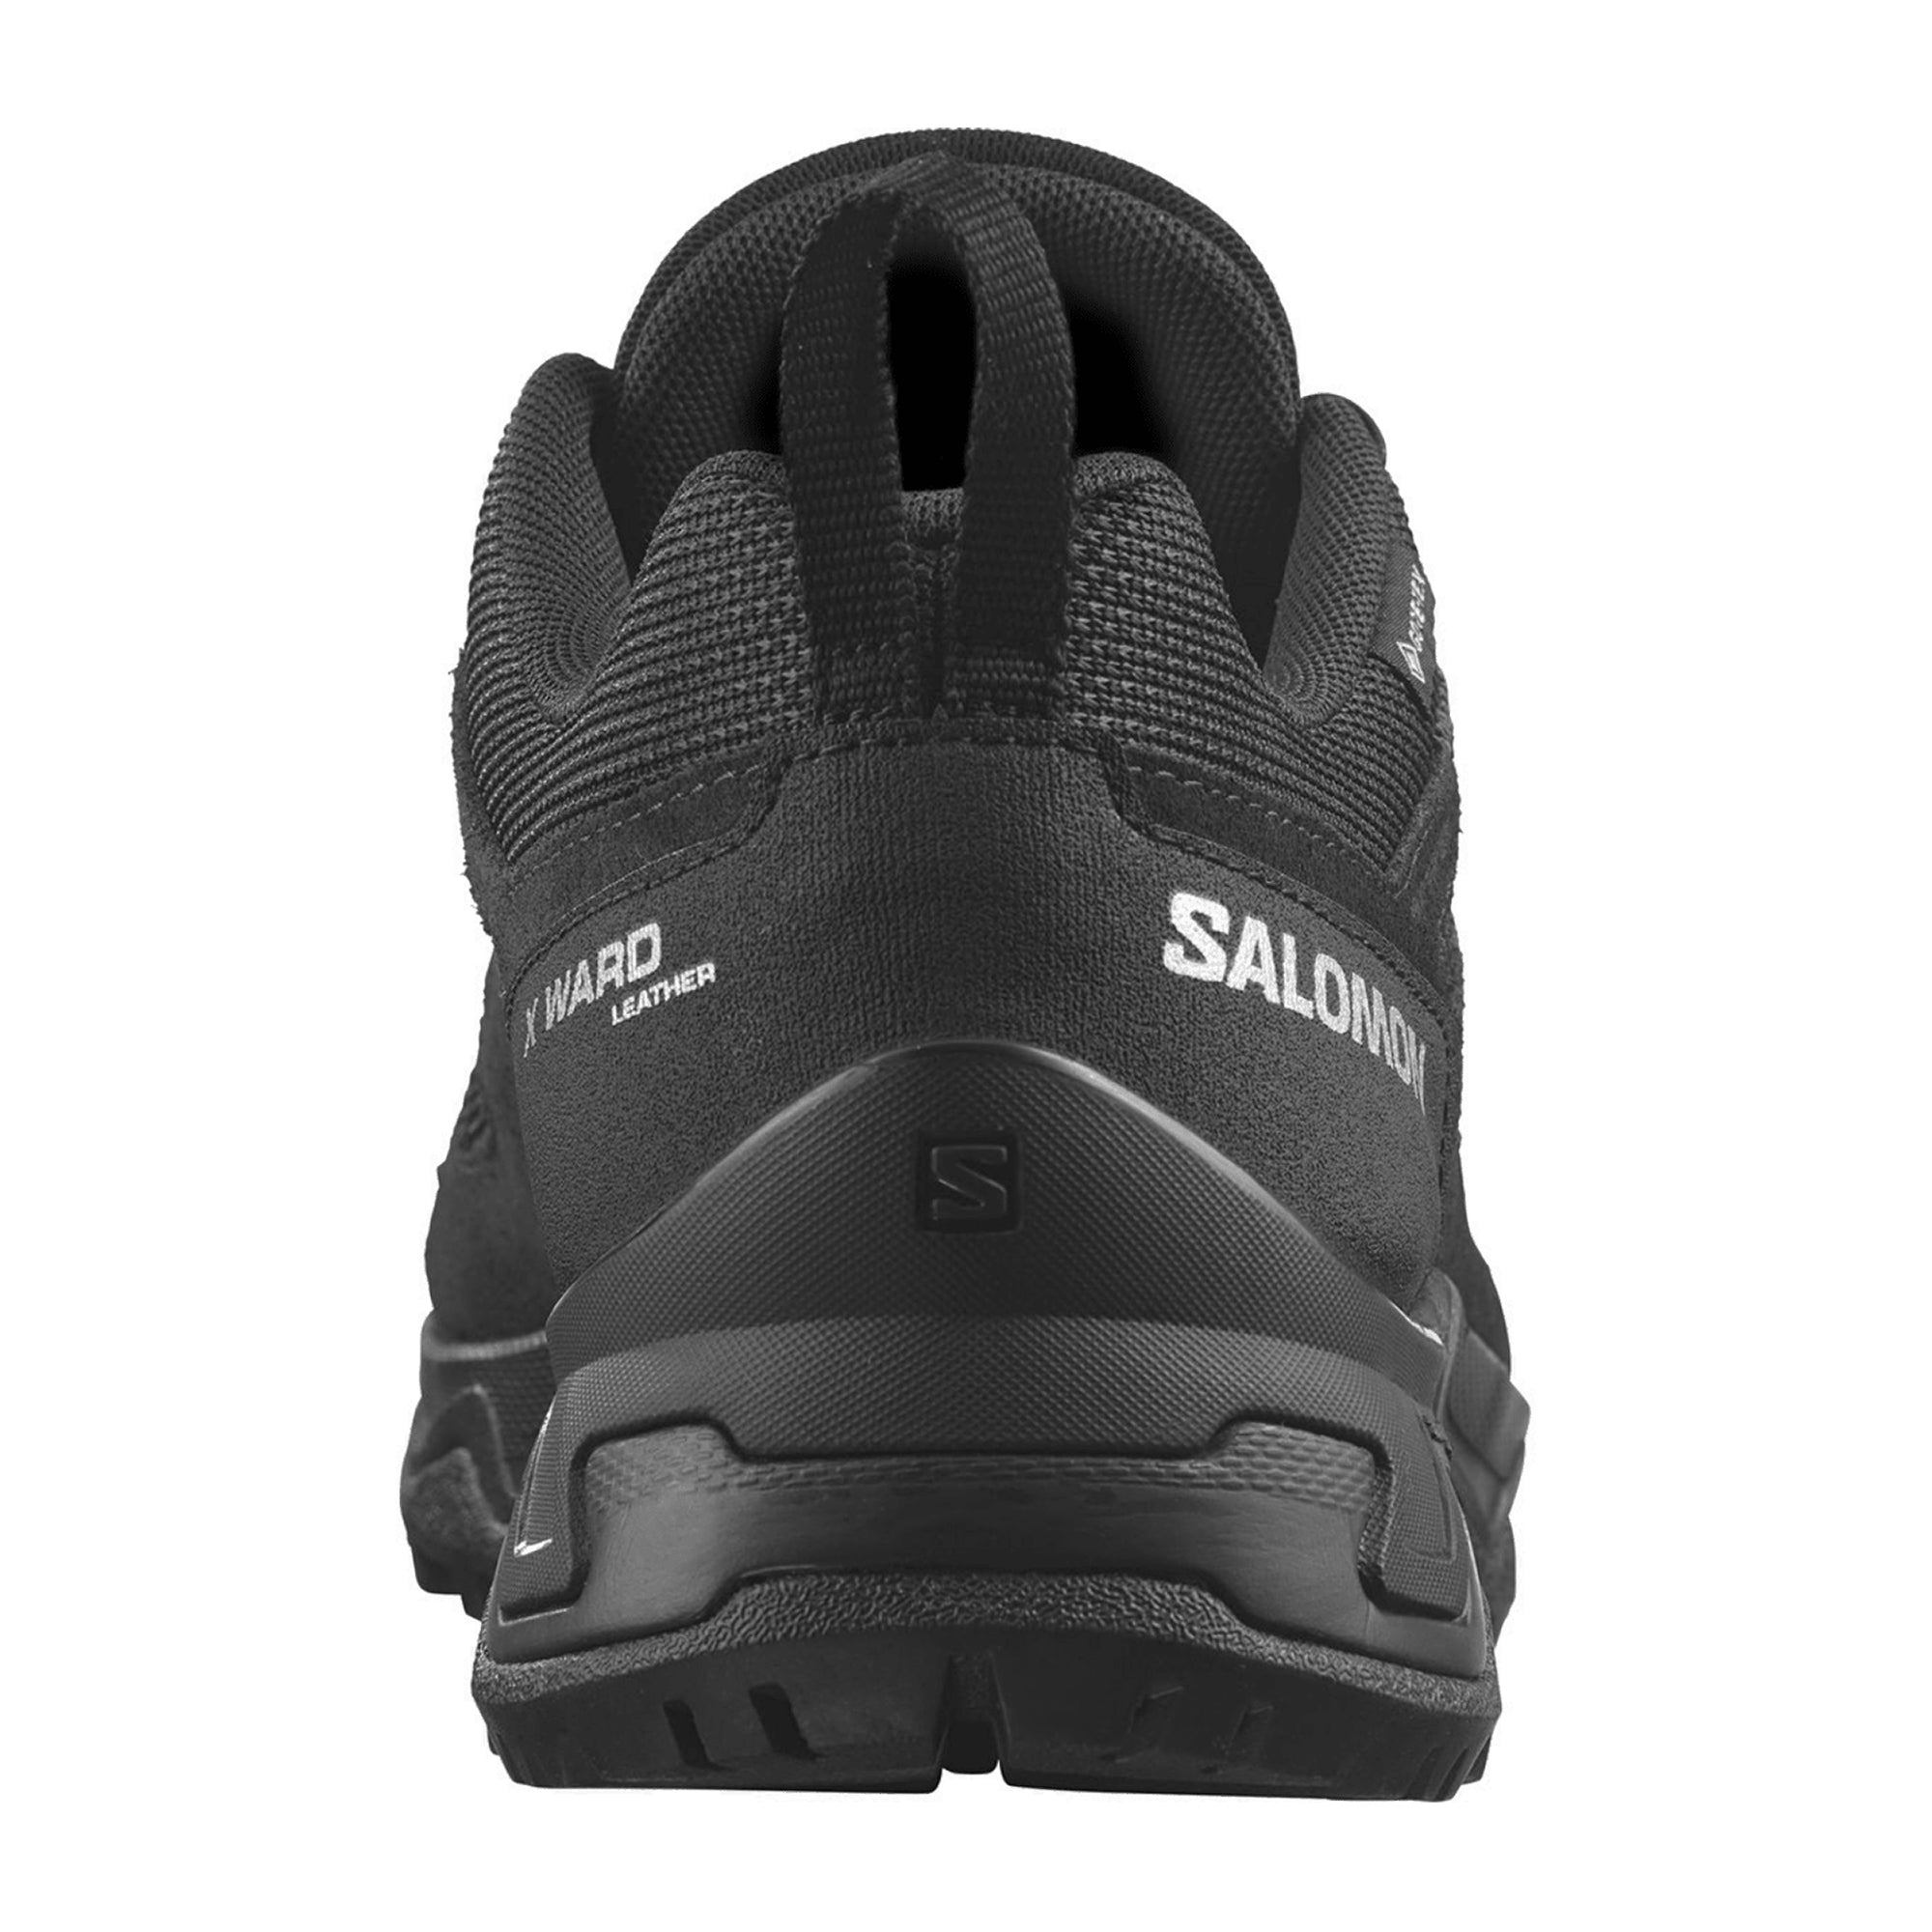 Salomon shoes X WARD LEATHER GTX Vinkha/Bl for men, black